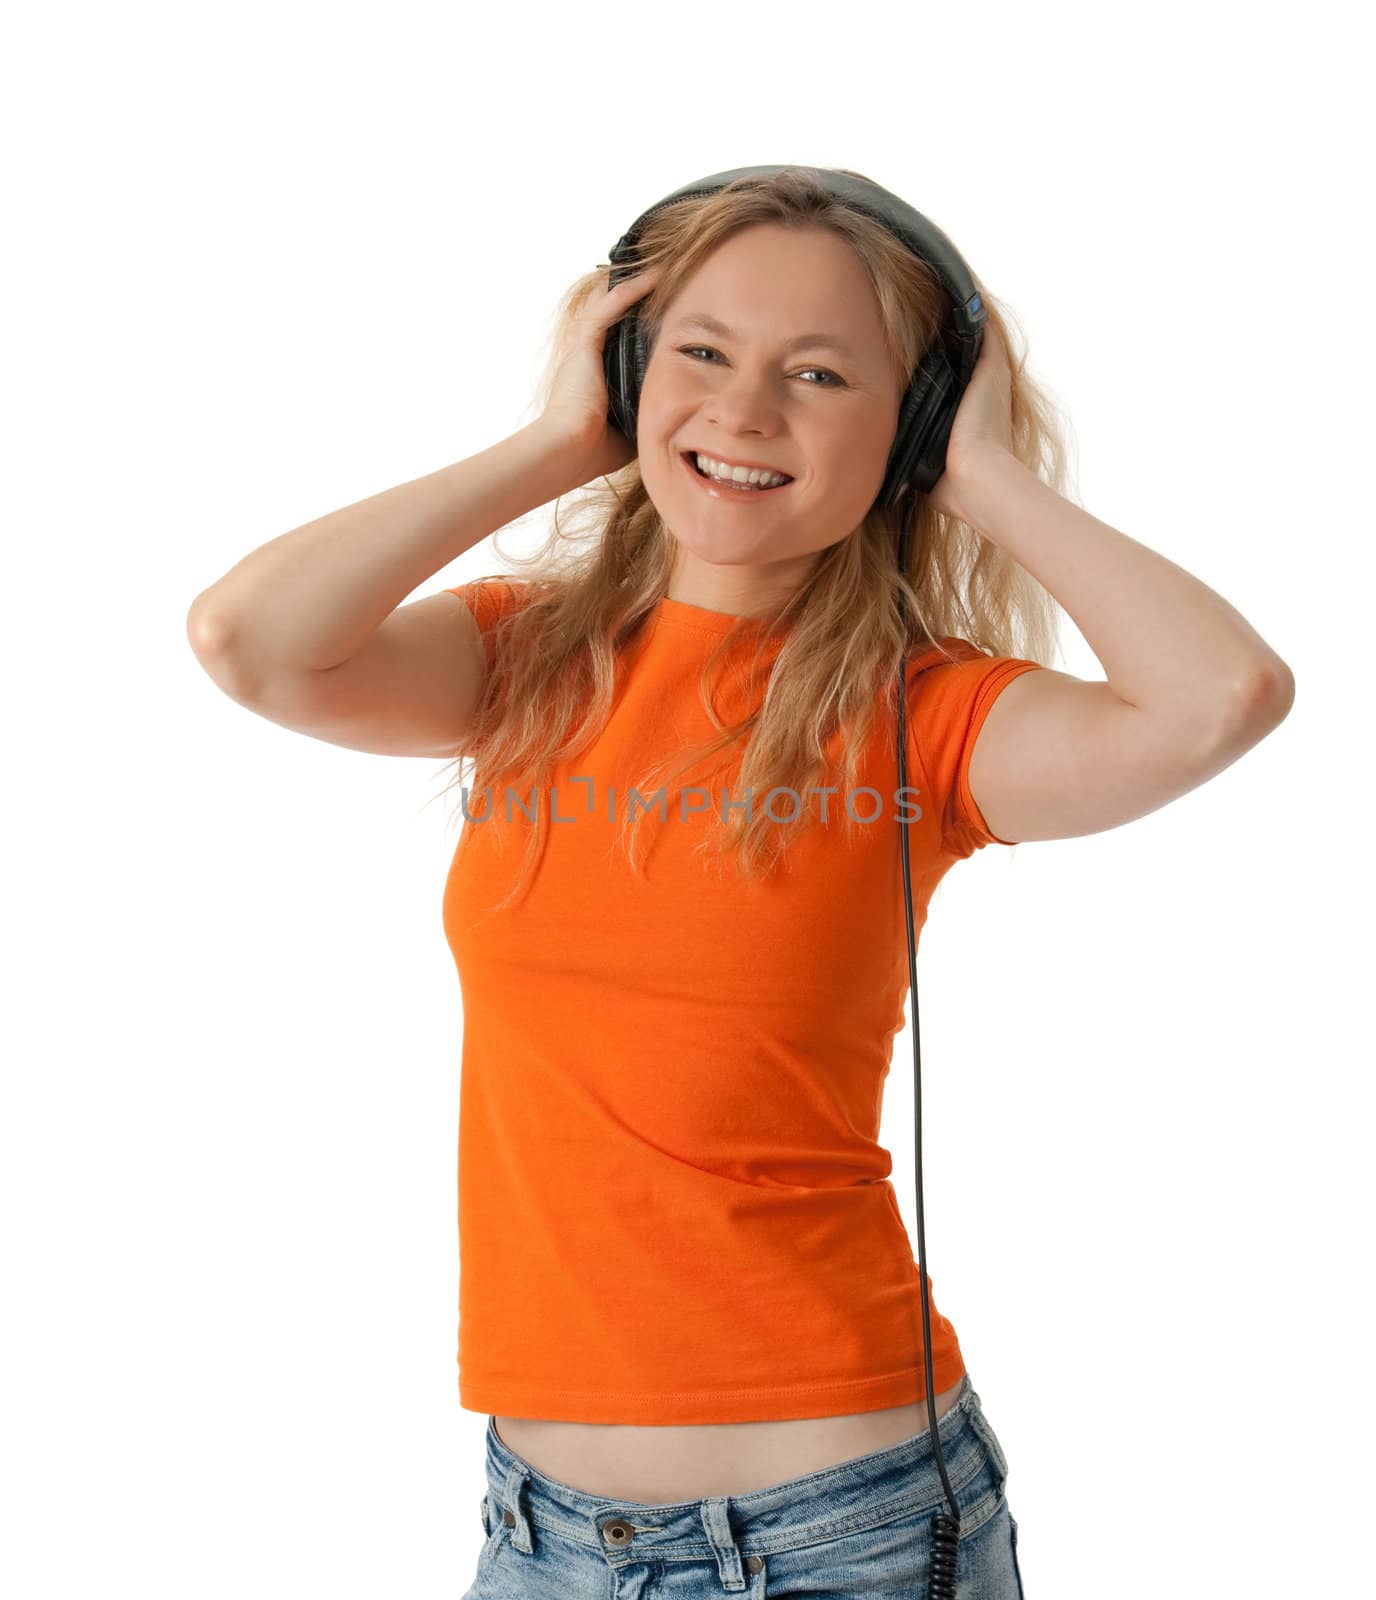 Smiling girl listening to music in headphones by anikasalsera